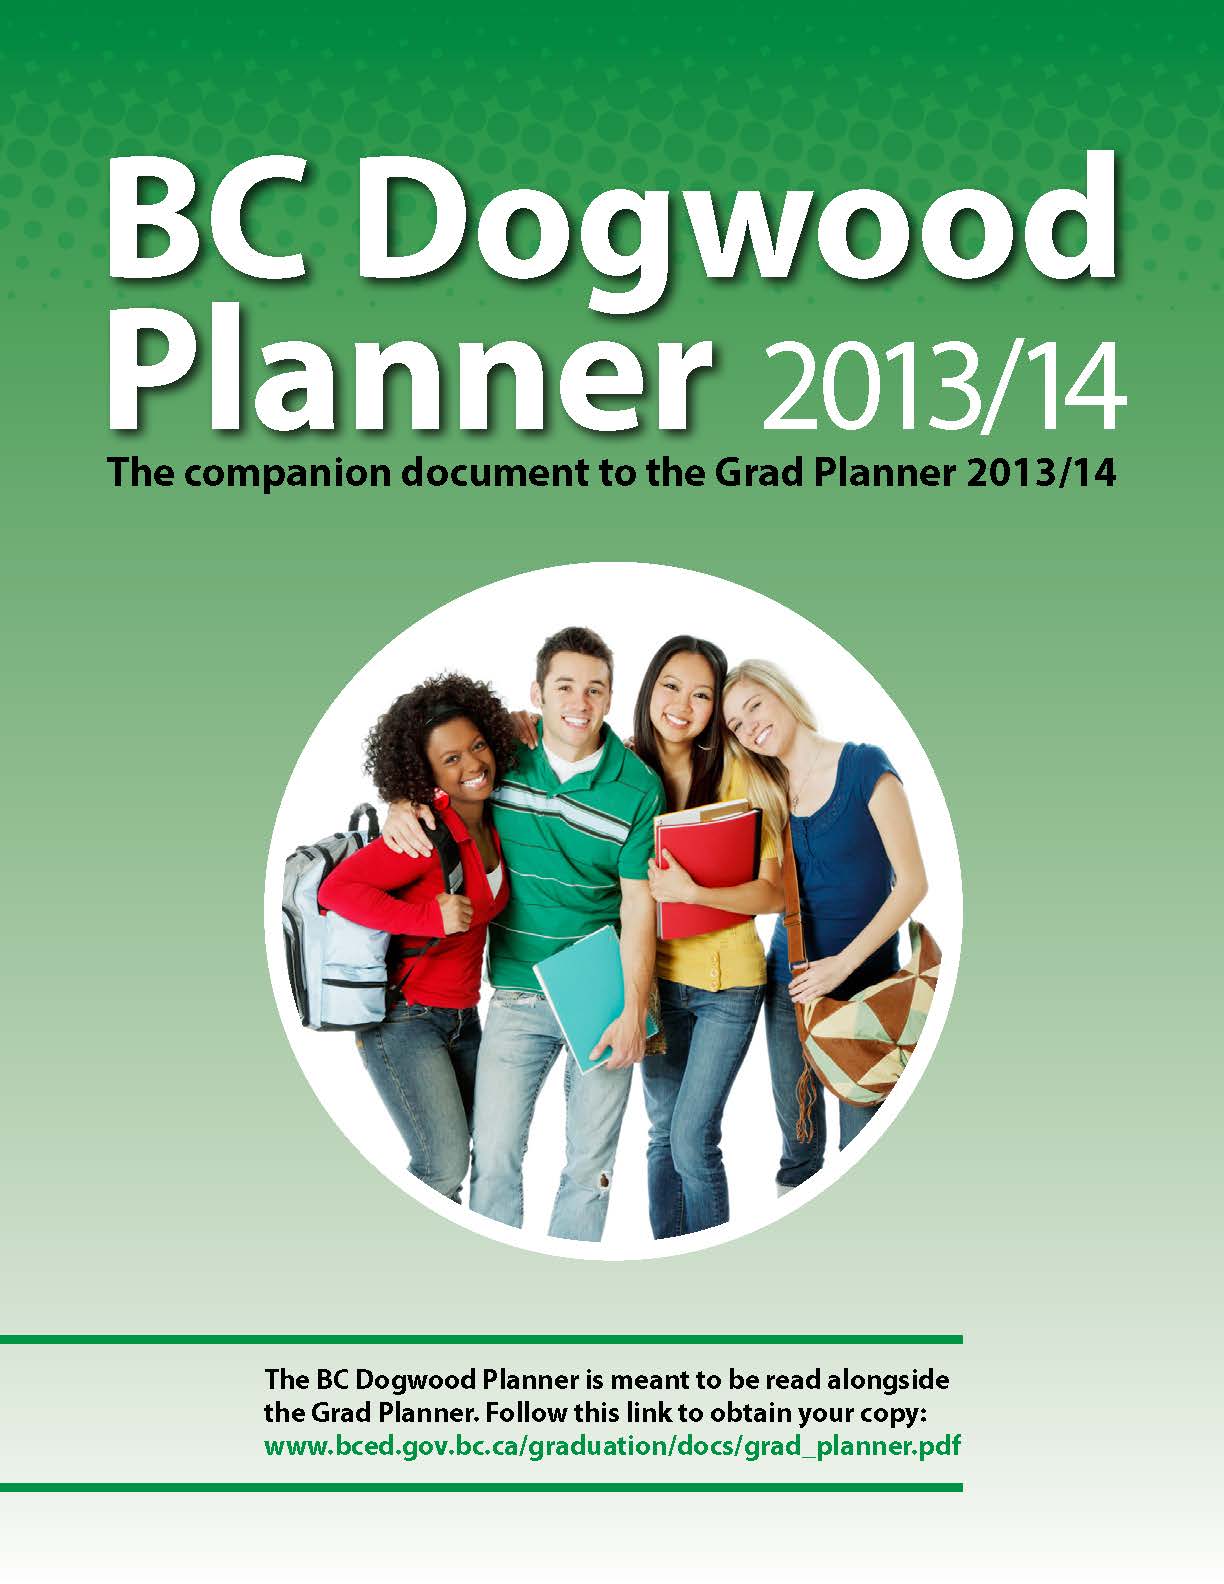 Image bc-dogwood-planner13-14 Eng